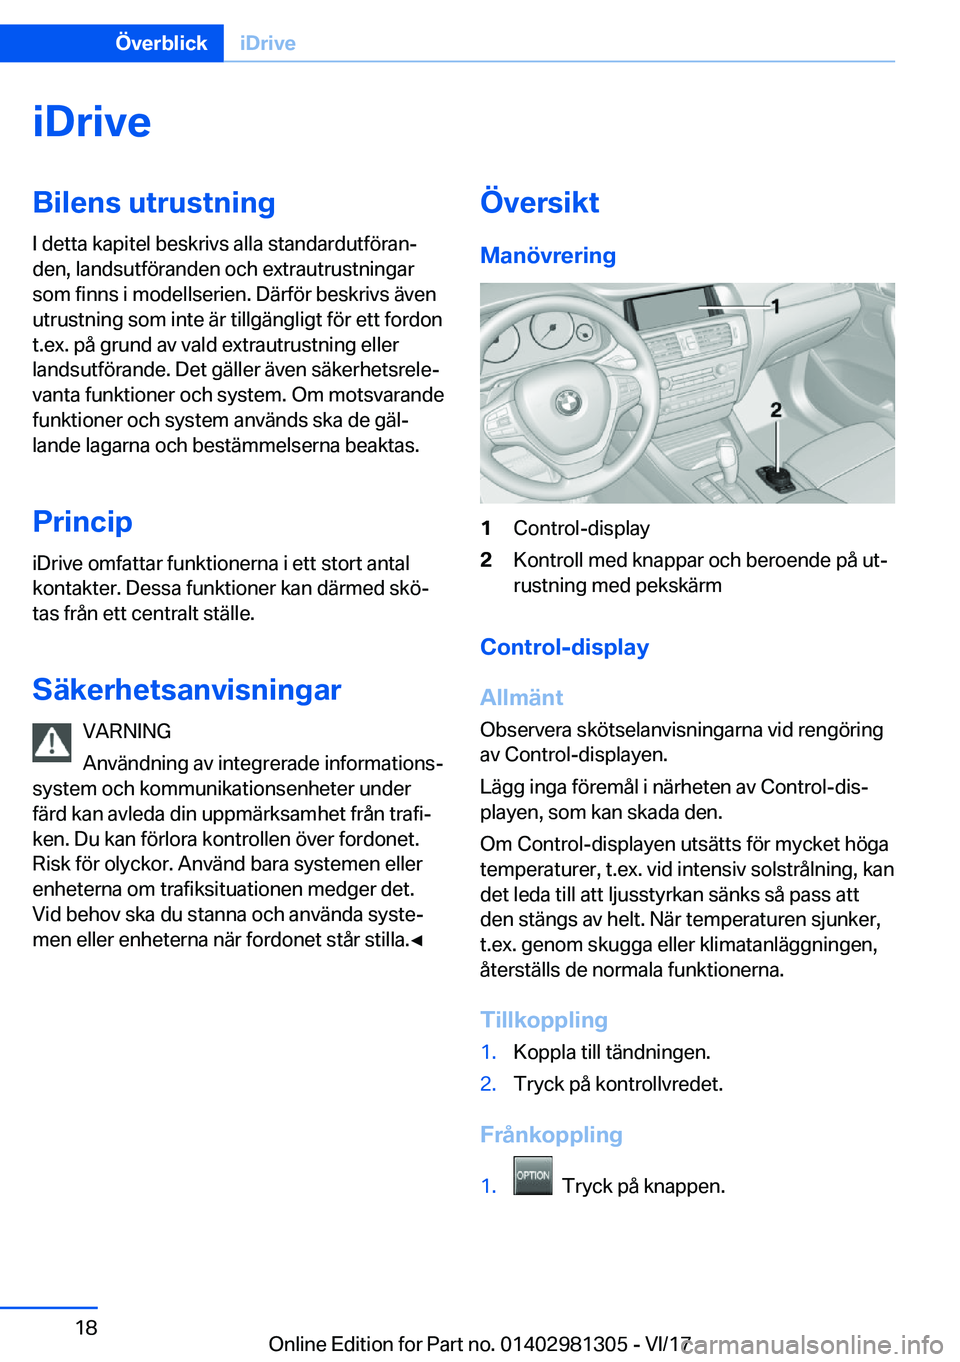 BMW X4 2018  InstruktionsbÖcker (in Swedish) �i�D�r�i�v�e�B�i�l�e�n�s��u�t�r�u�s�t�n�i�n�g
�I� �d�e�t�t�a� �k�a�p�i�t�e�l� �b�e�s�k�r�i�v�s� �a�l�l�a� �s�t�a�n�d�a�r�d�u�t�f�